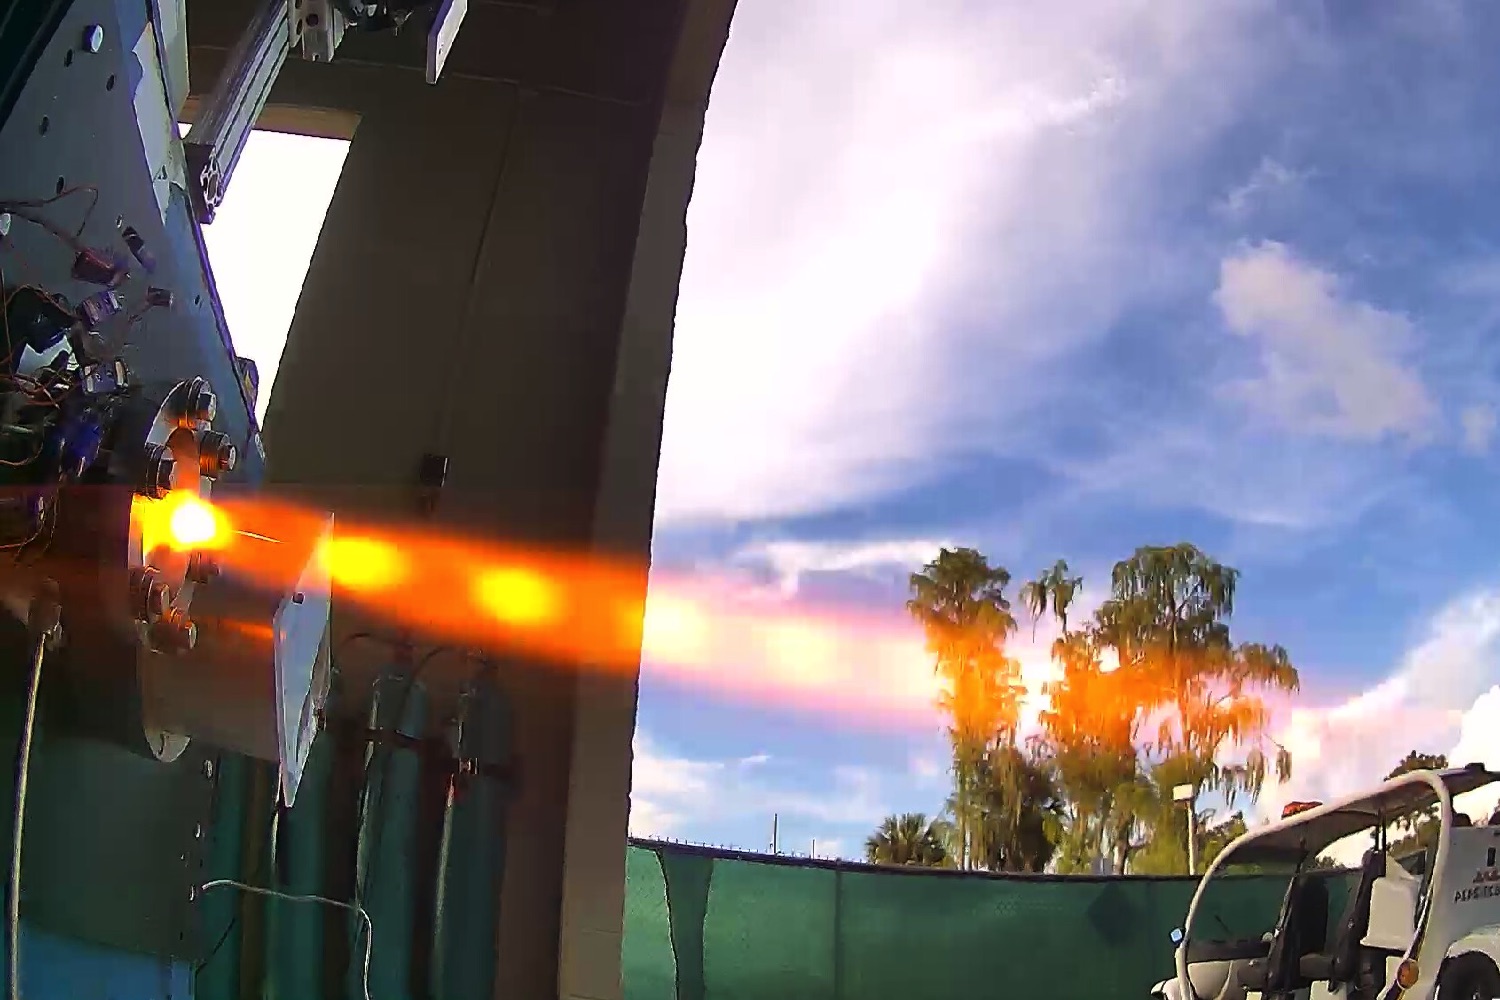 UCF Researchers Develop Groundbreaking New Rocket-Propulsion System